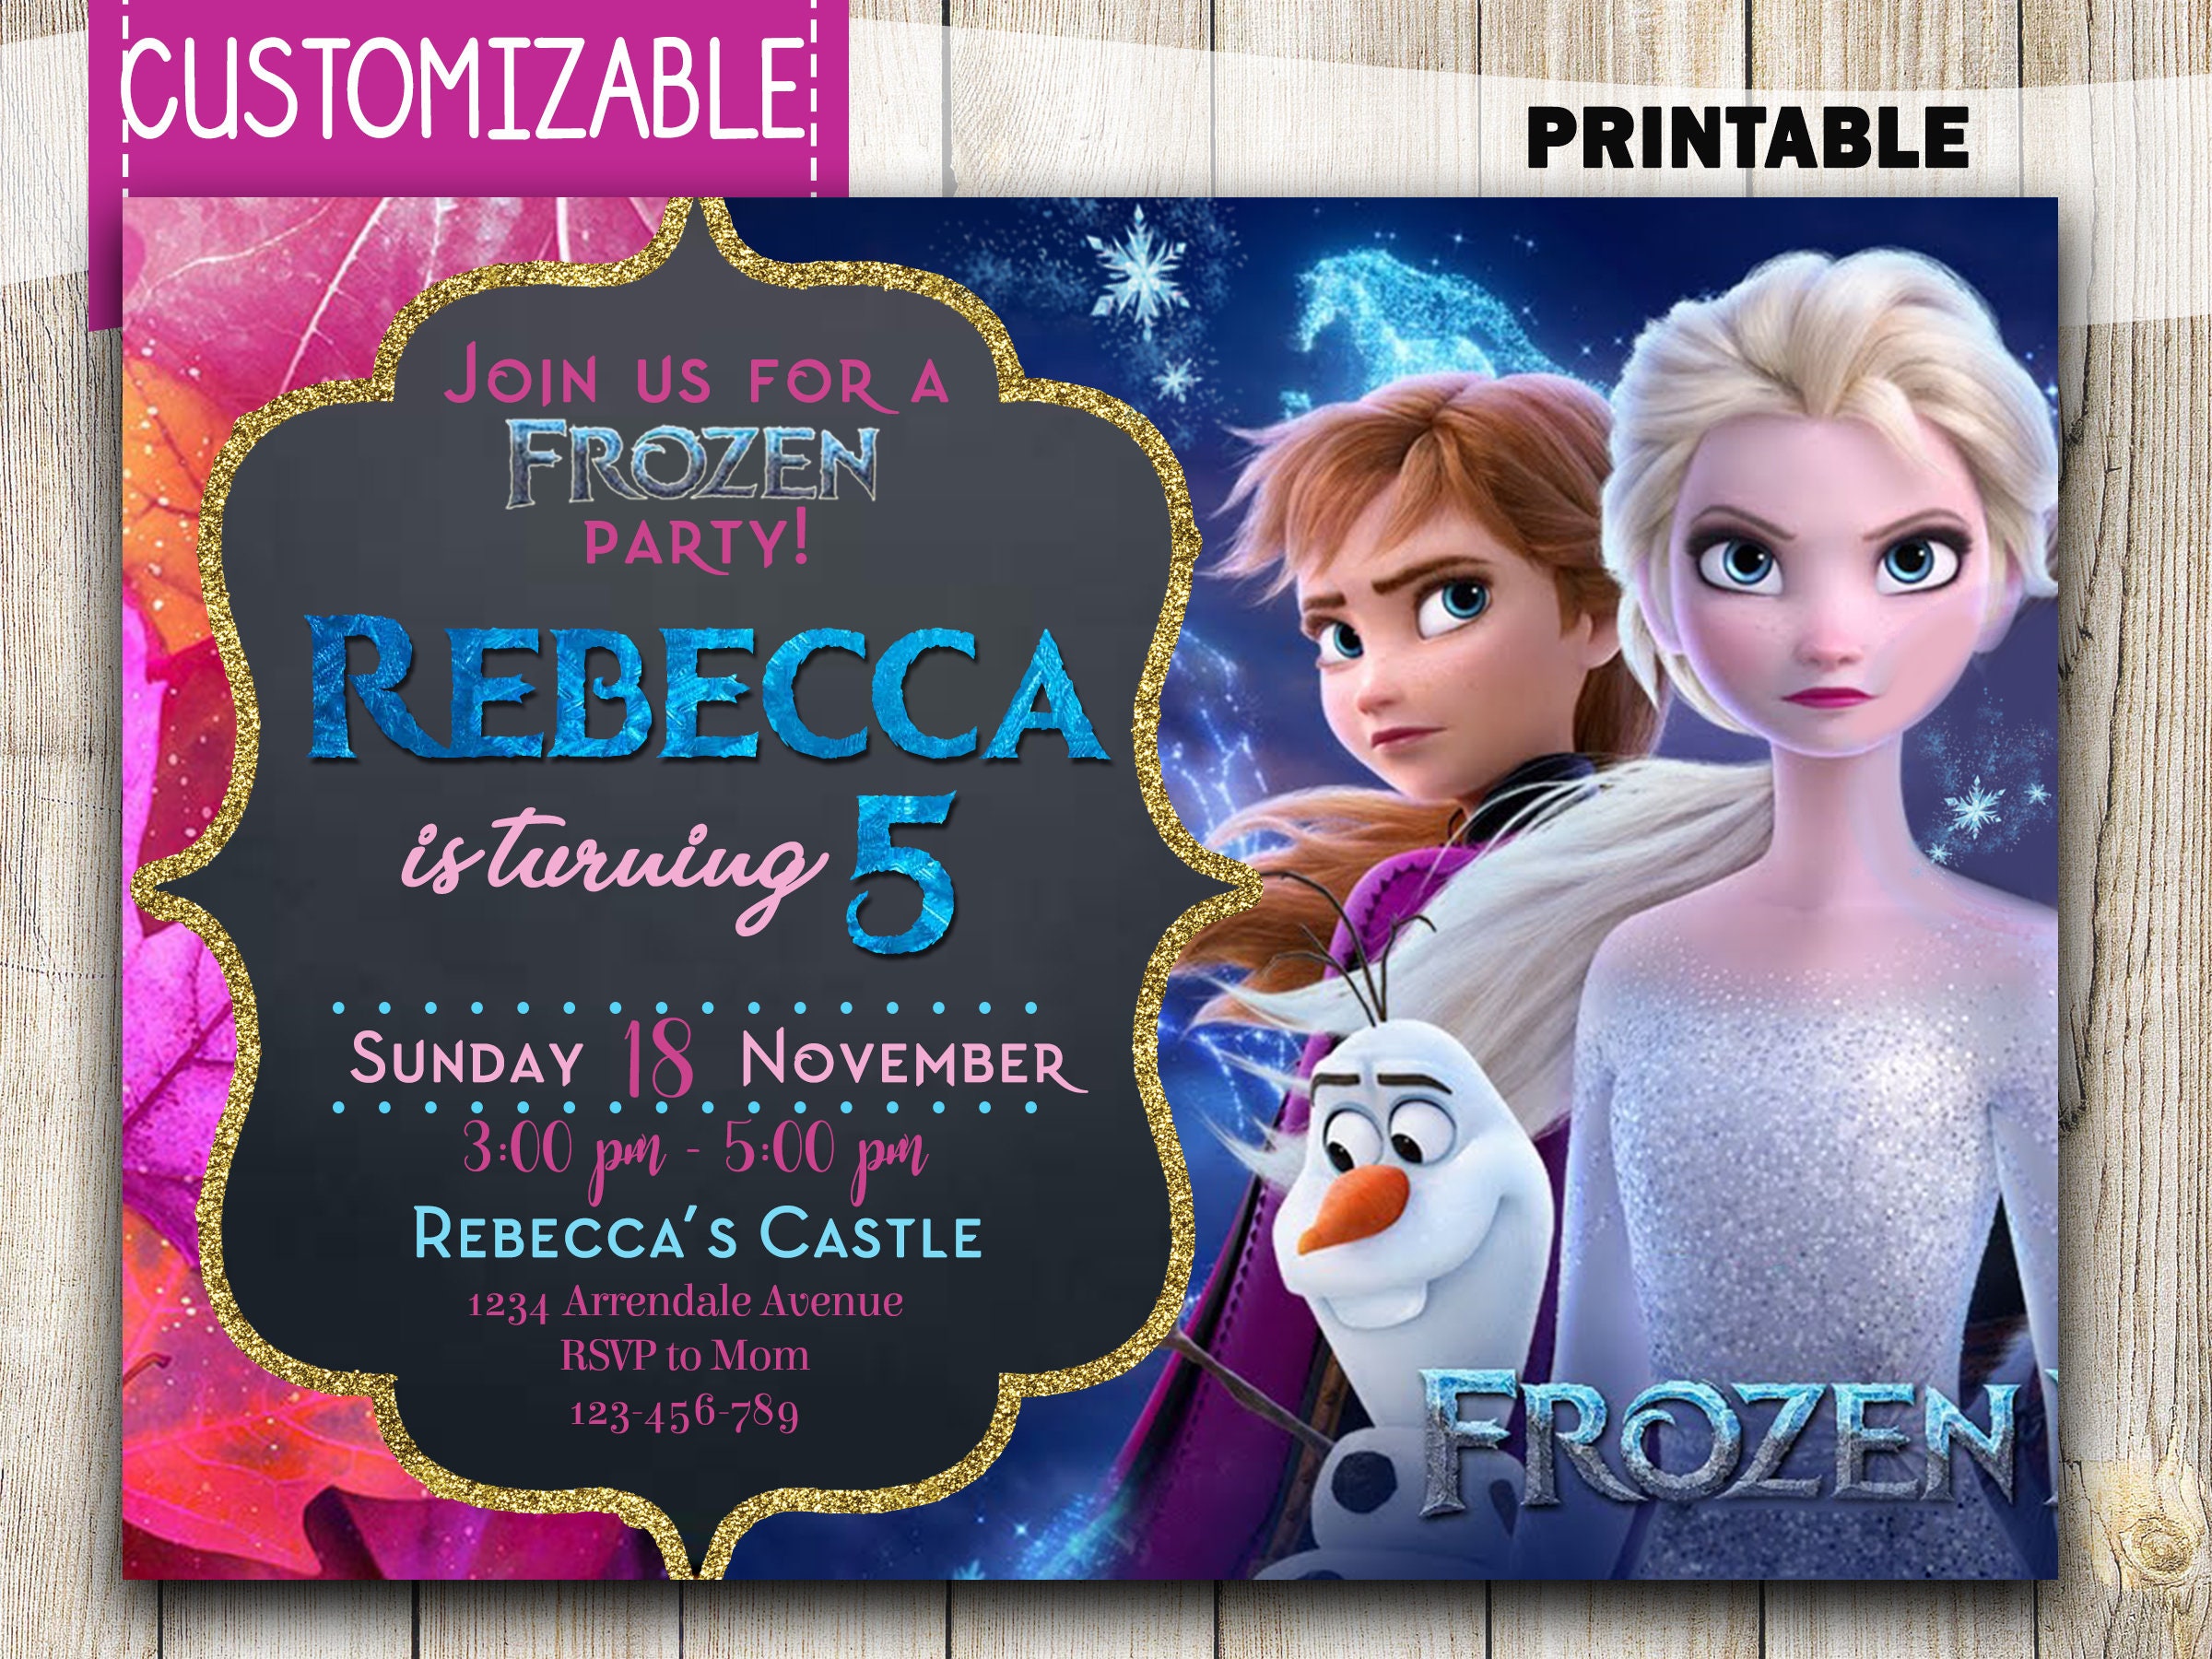 Frozen Coloring Pages, Frozen 2 Party Favors, Frozen Birthday, Party Favor, Frozen  Coloring Book, Frozen Activities, Elsa, Anna, Olaf 